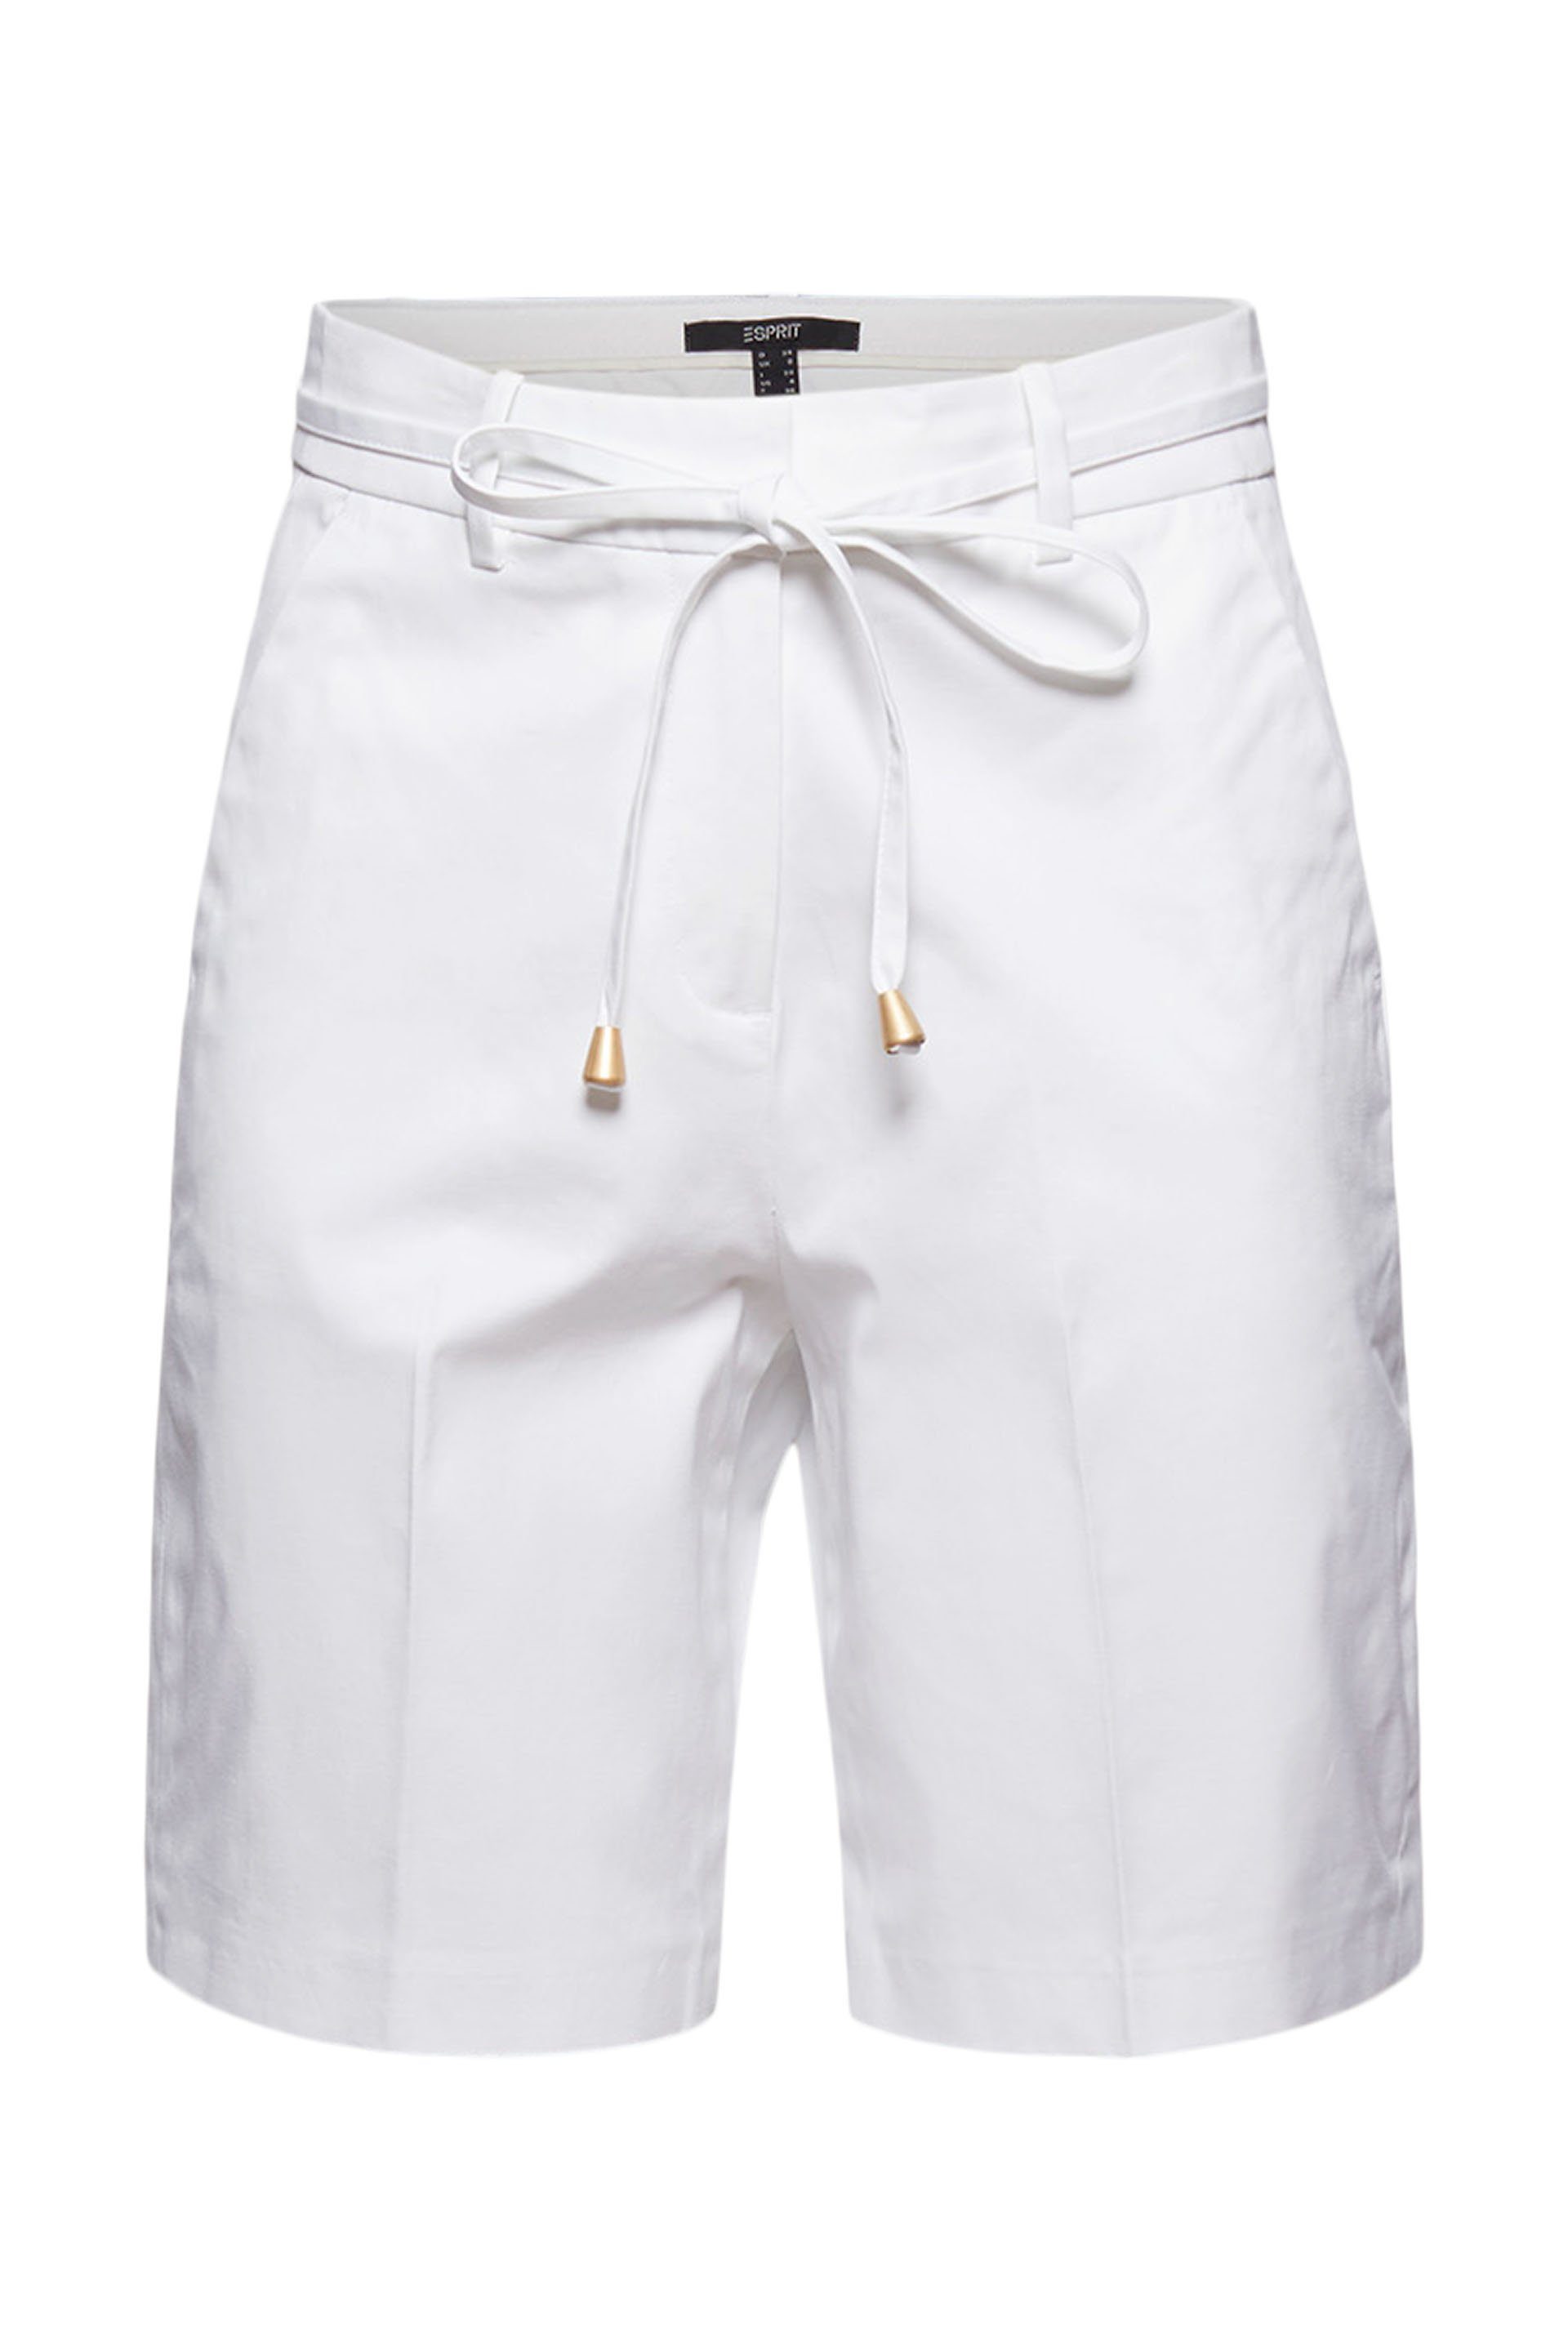 Collection white Shorts Esprit